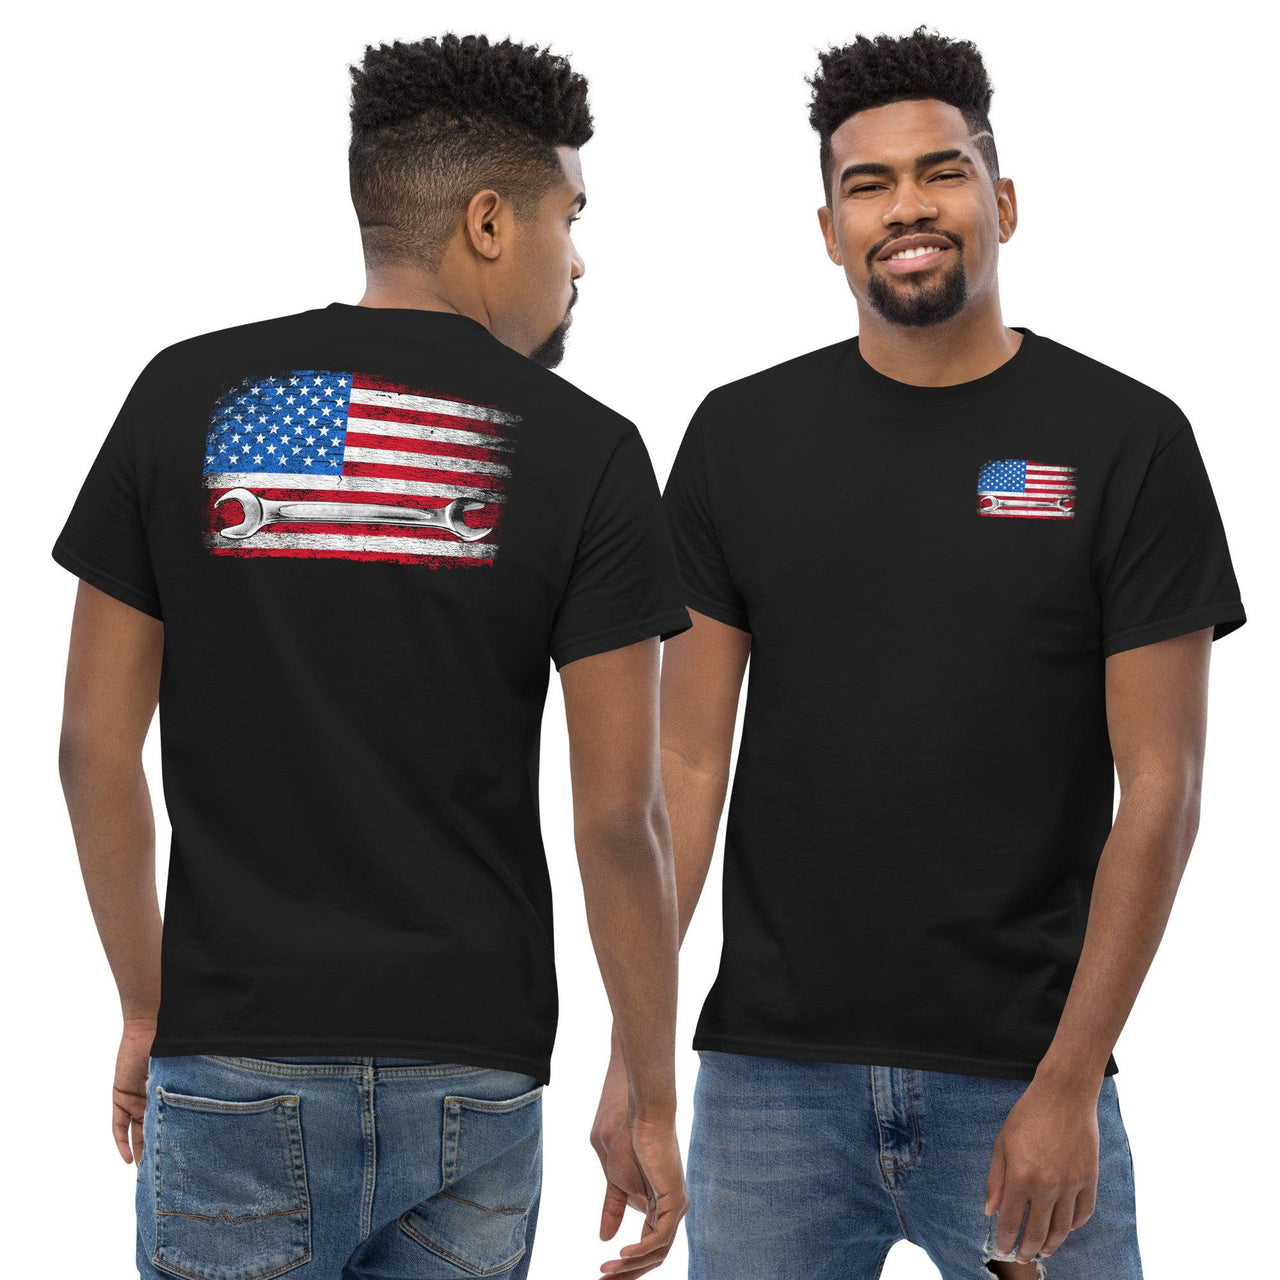 Mechanic T-Shirt American Flag Wrench Design modeled in black 2